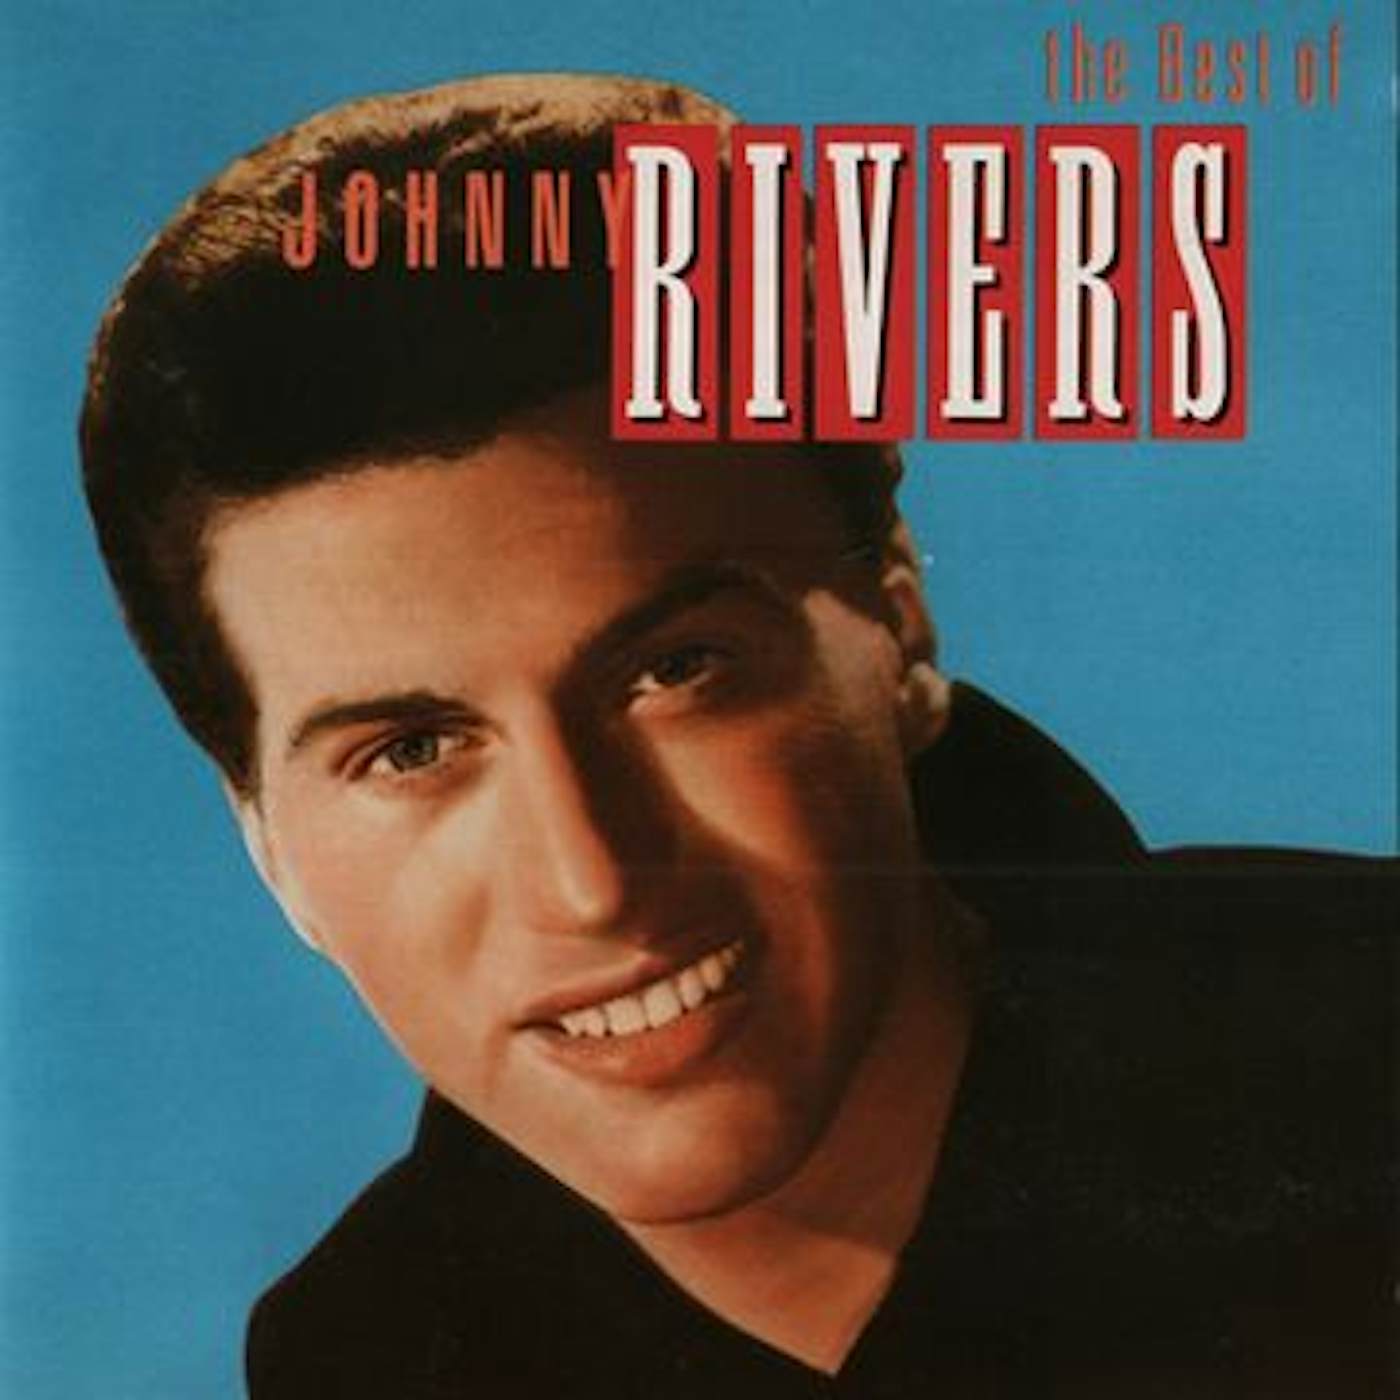 Best Of Johnny Rivers Vinyl Record